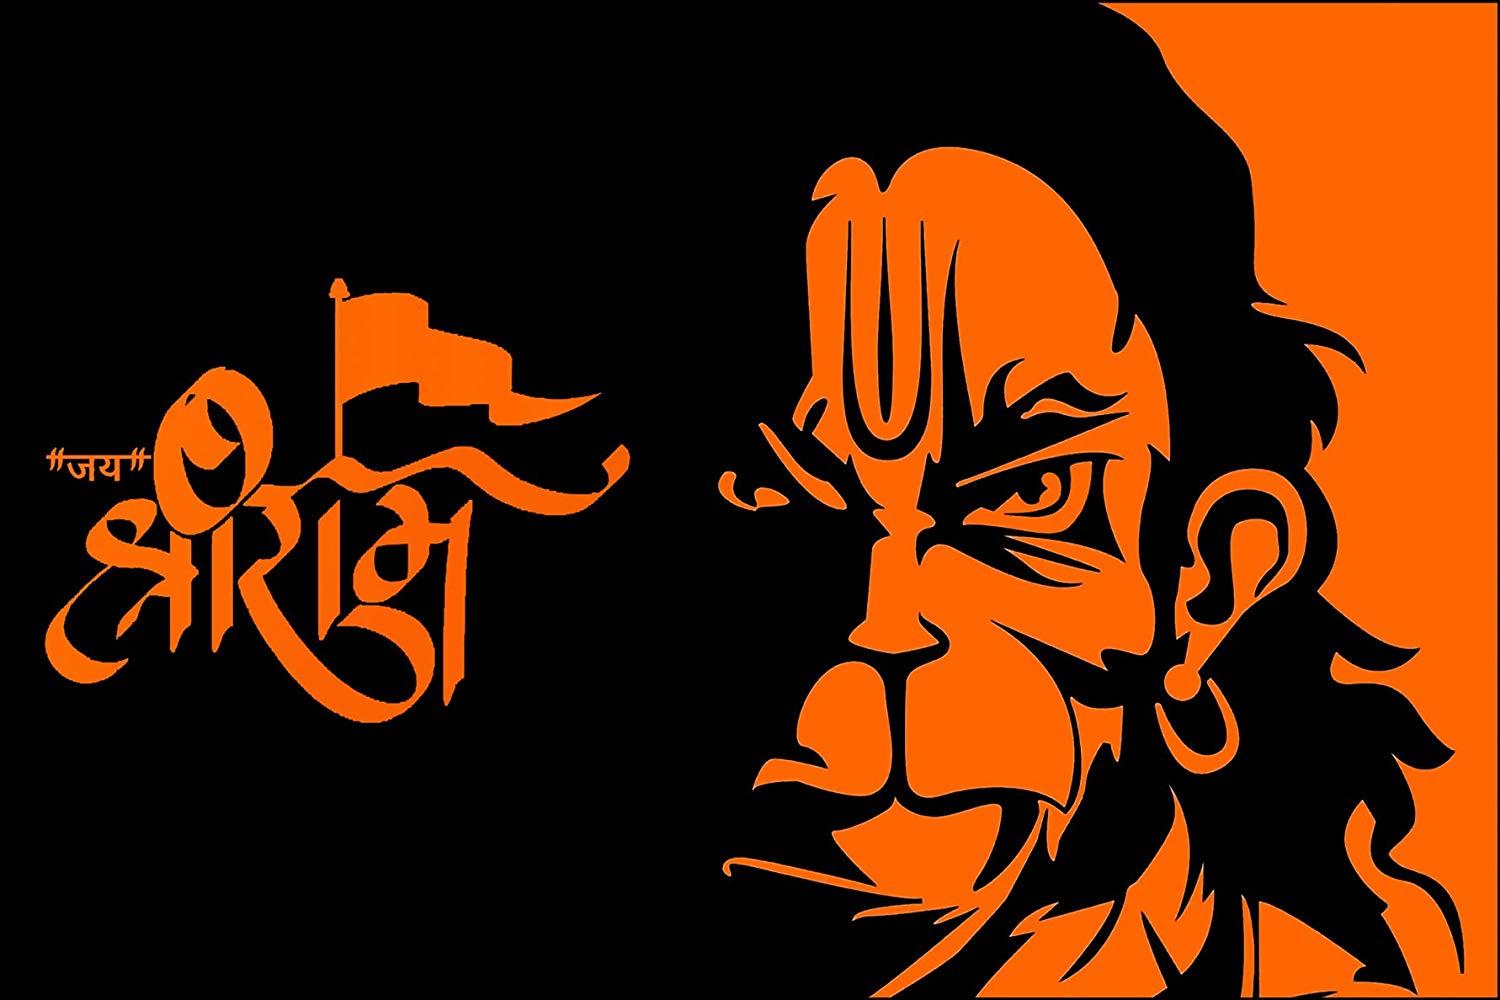 Buy kartik Lord Hanuman Ji Wallpaper Print Poster Quote Removable